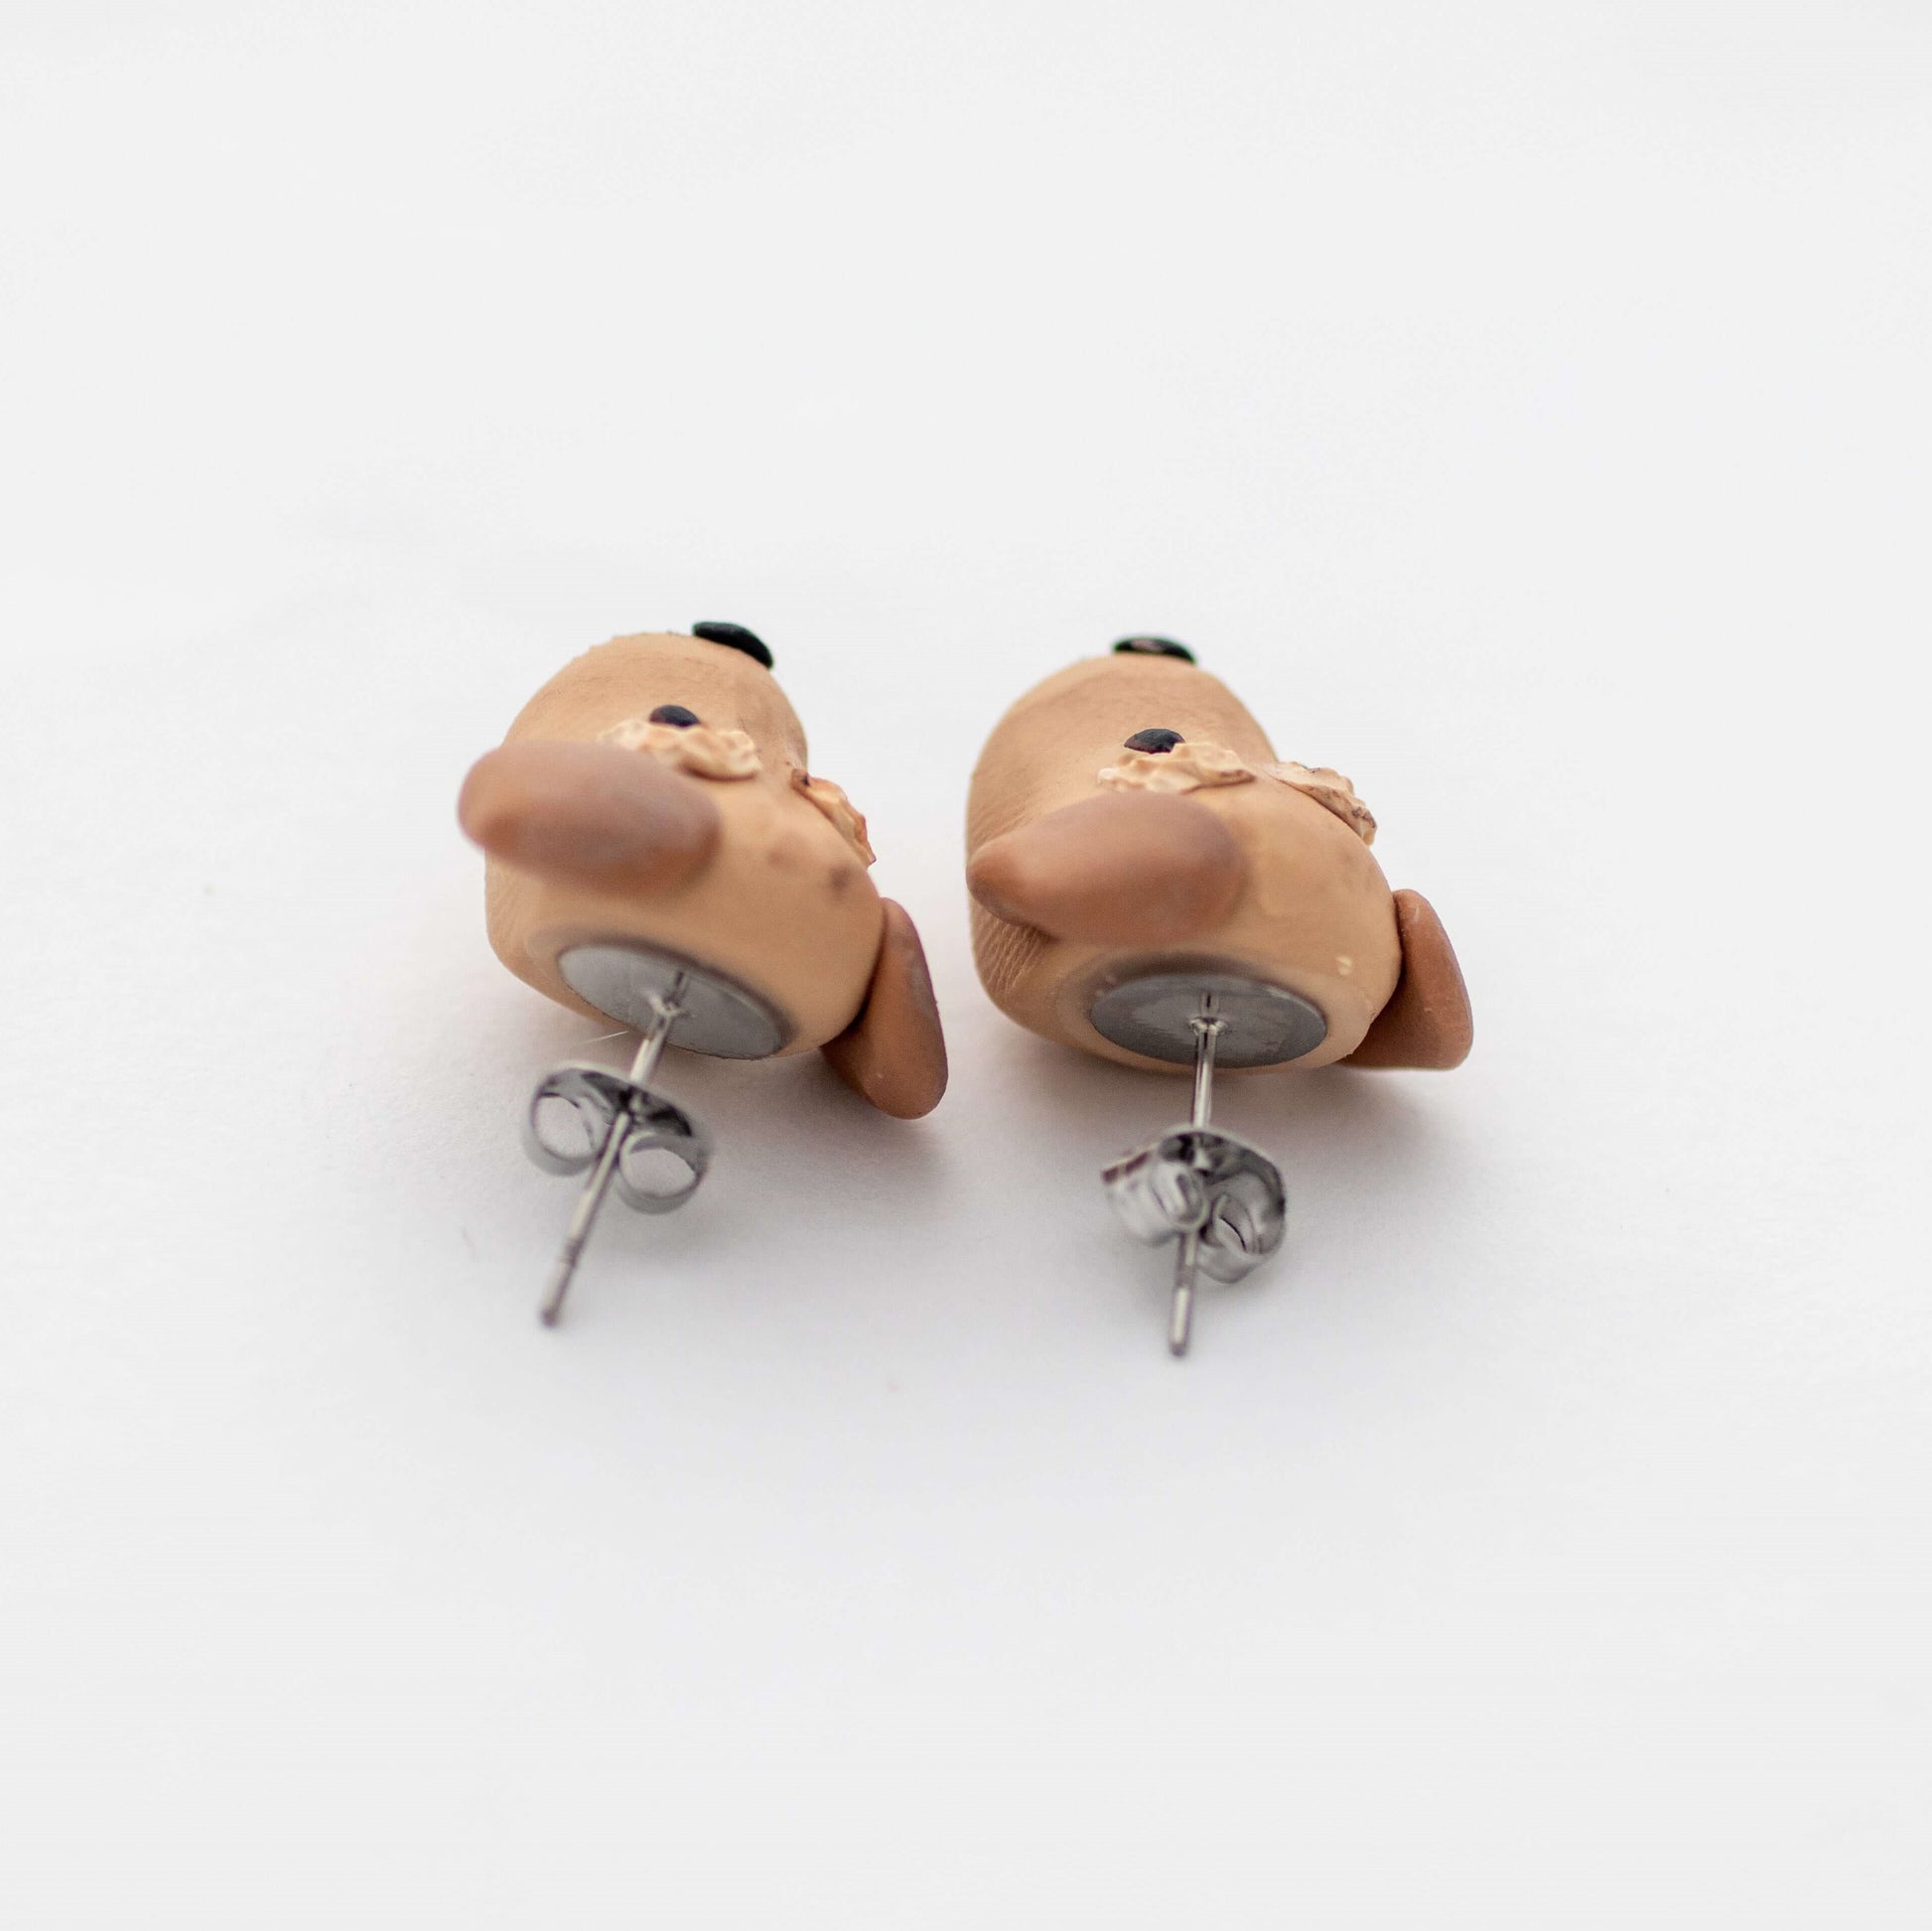 Handmade polymer clay golden retriever dog stud earrings showing surgical steel backs